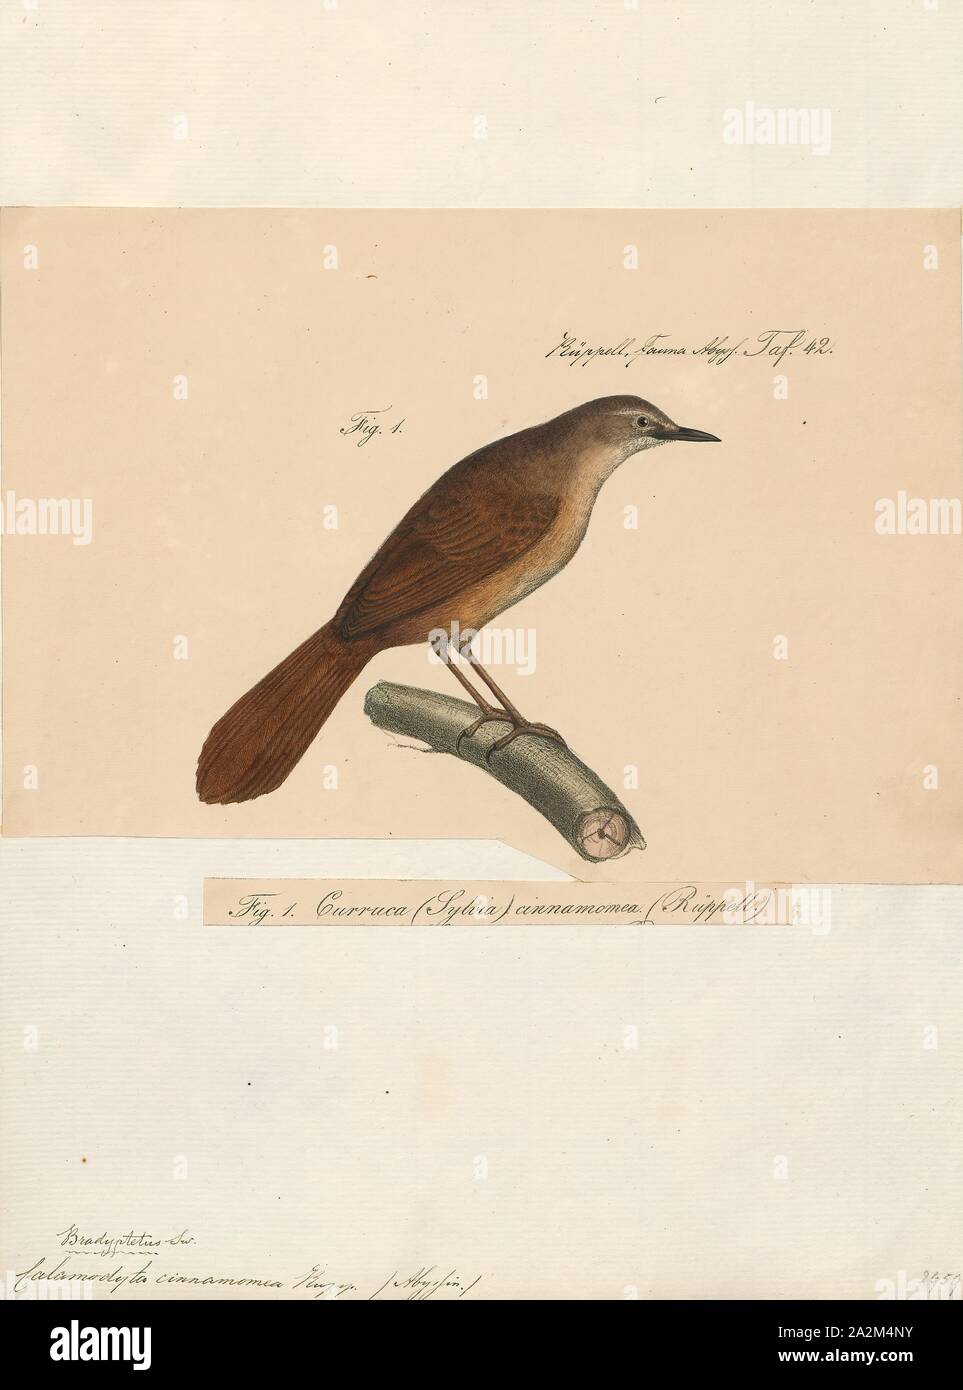 Calamodyta cinnamomea, Print, 1835 Stock Photo